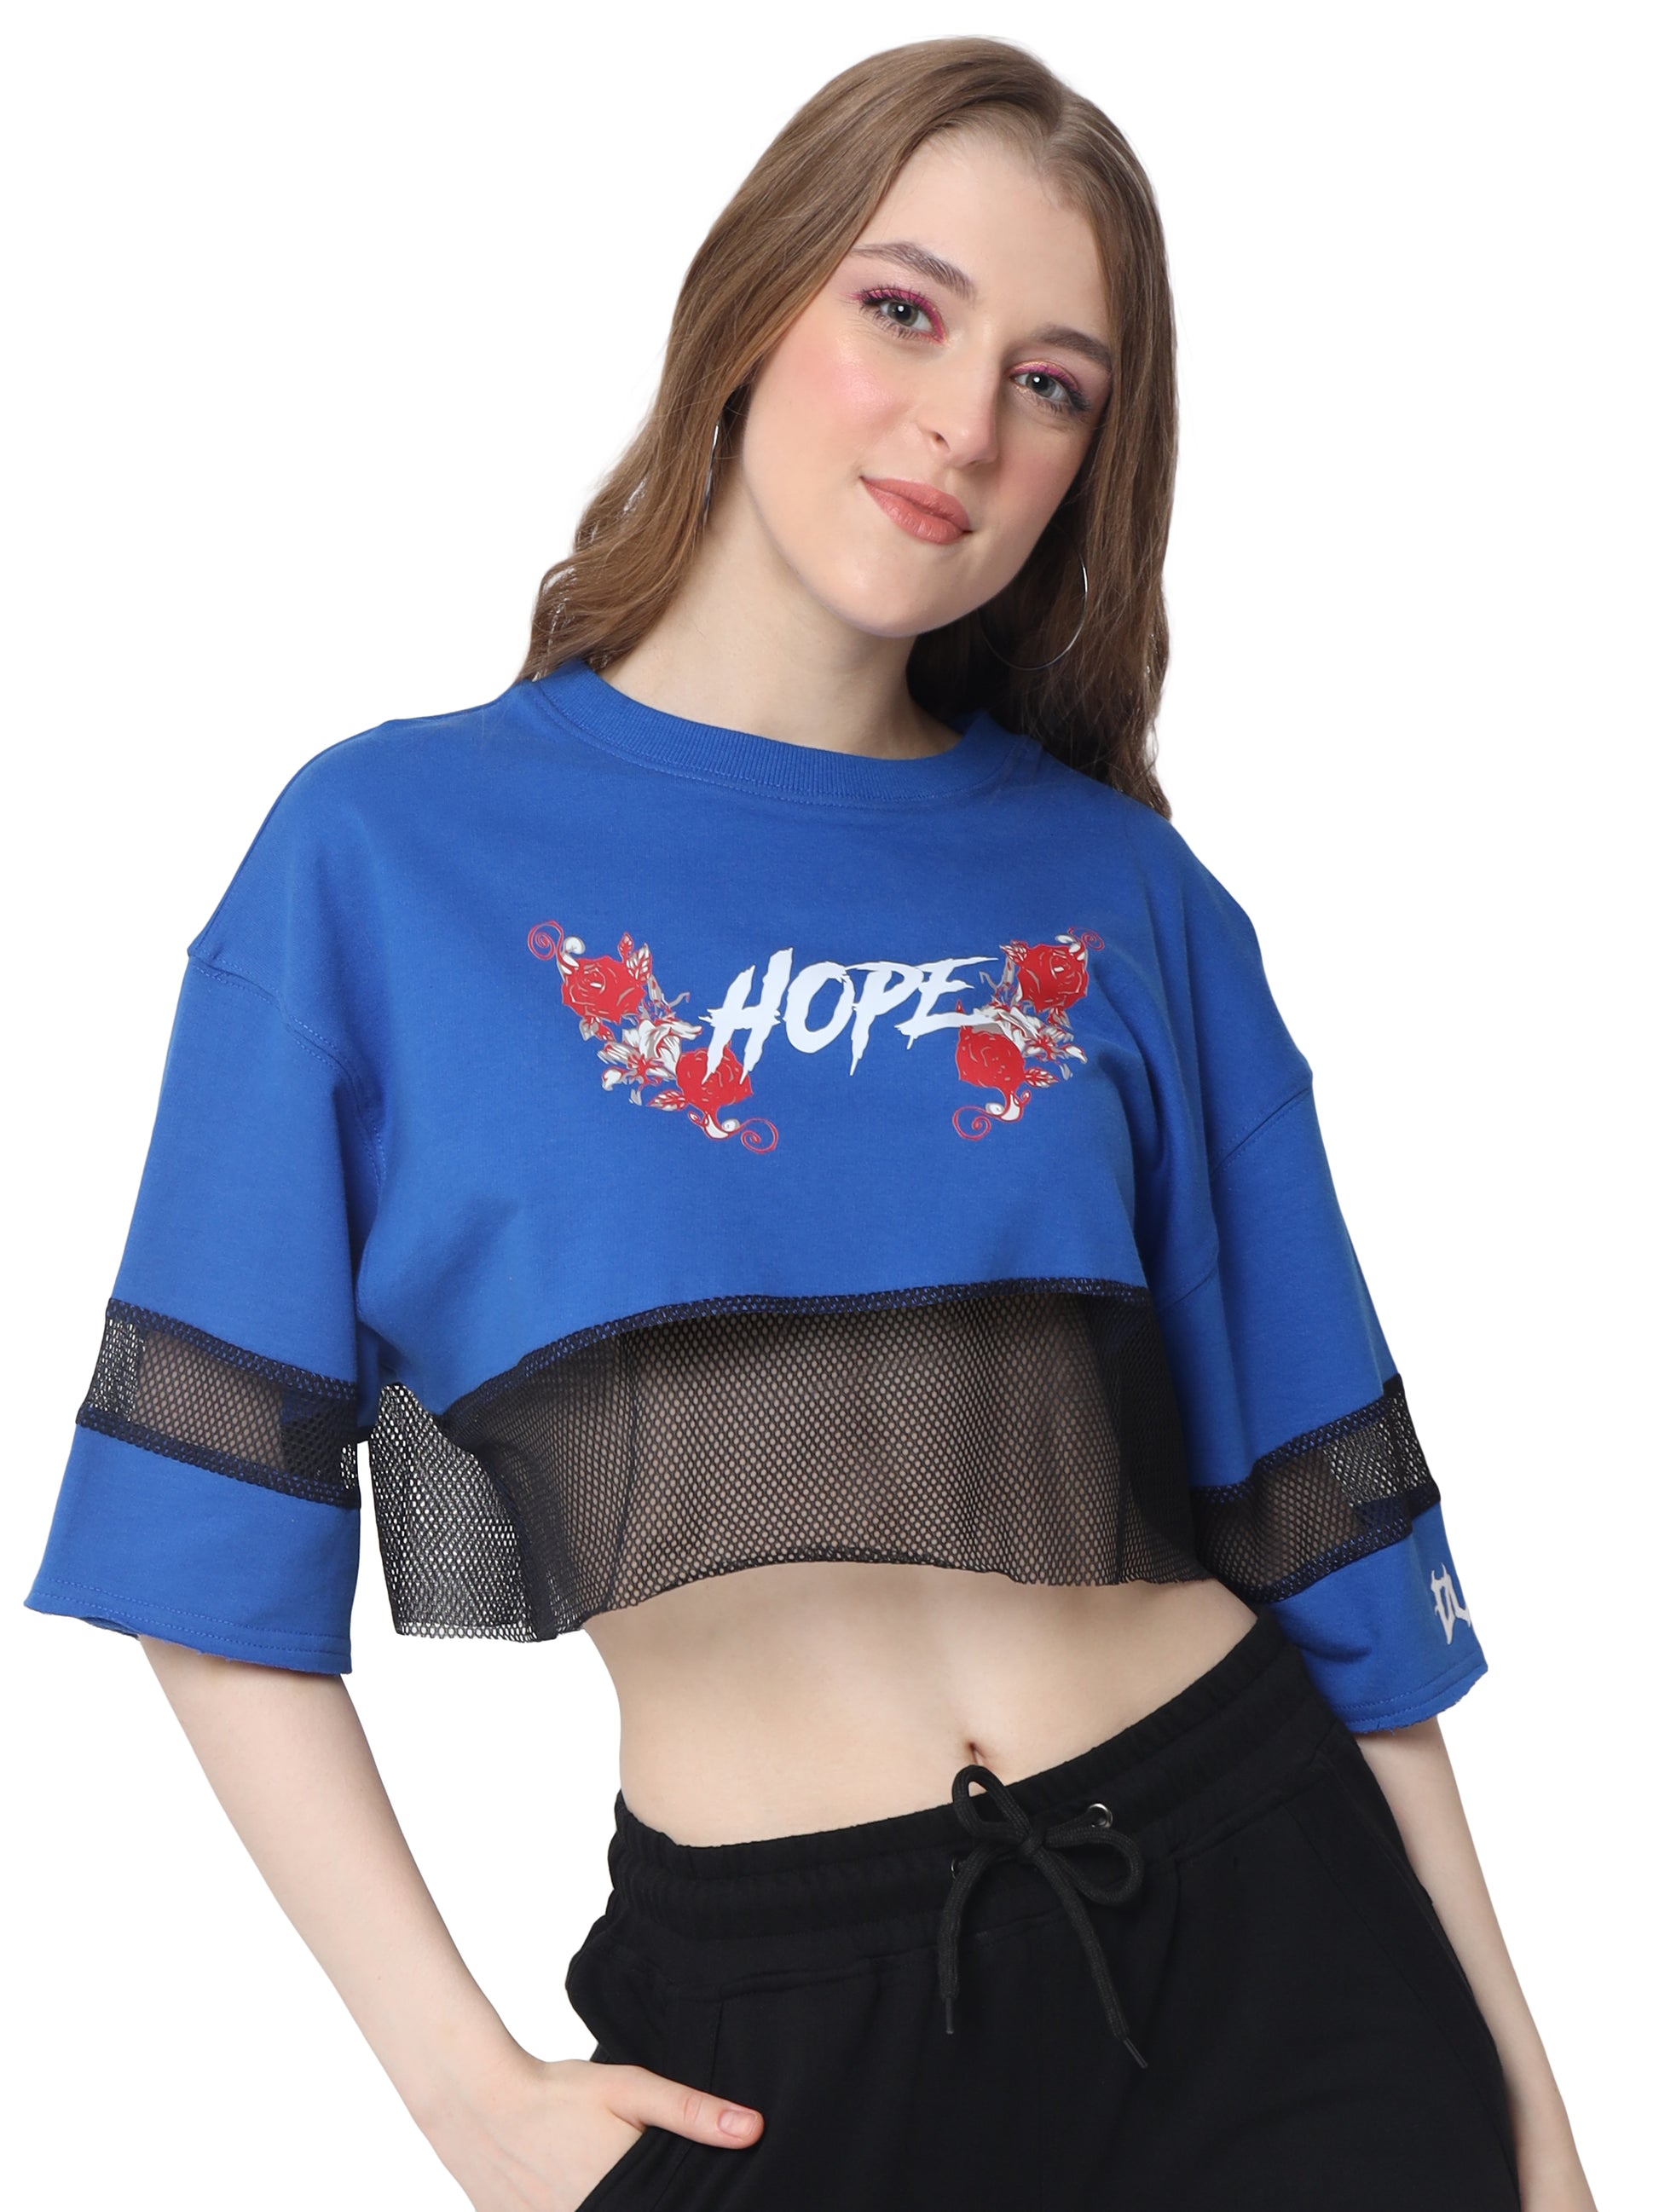 Hope Oversized Cropped T-Shirts (Blue) - Wearduds